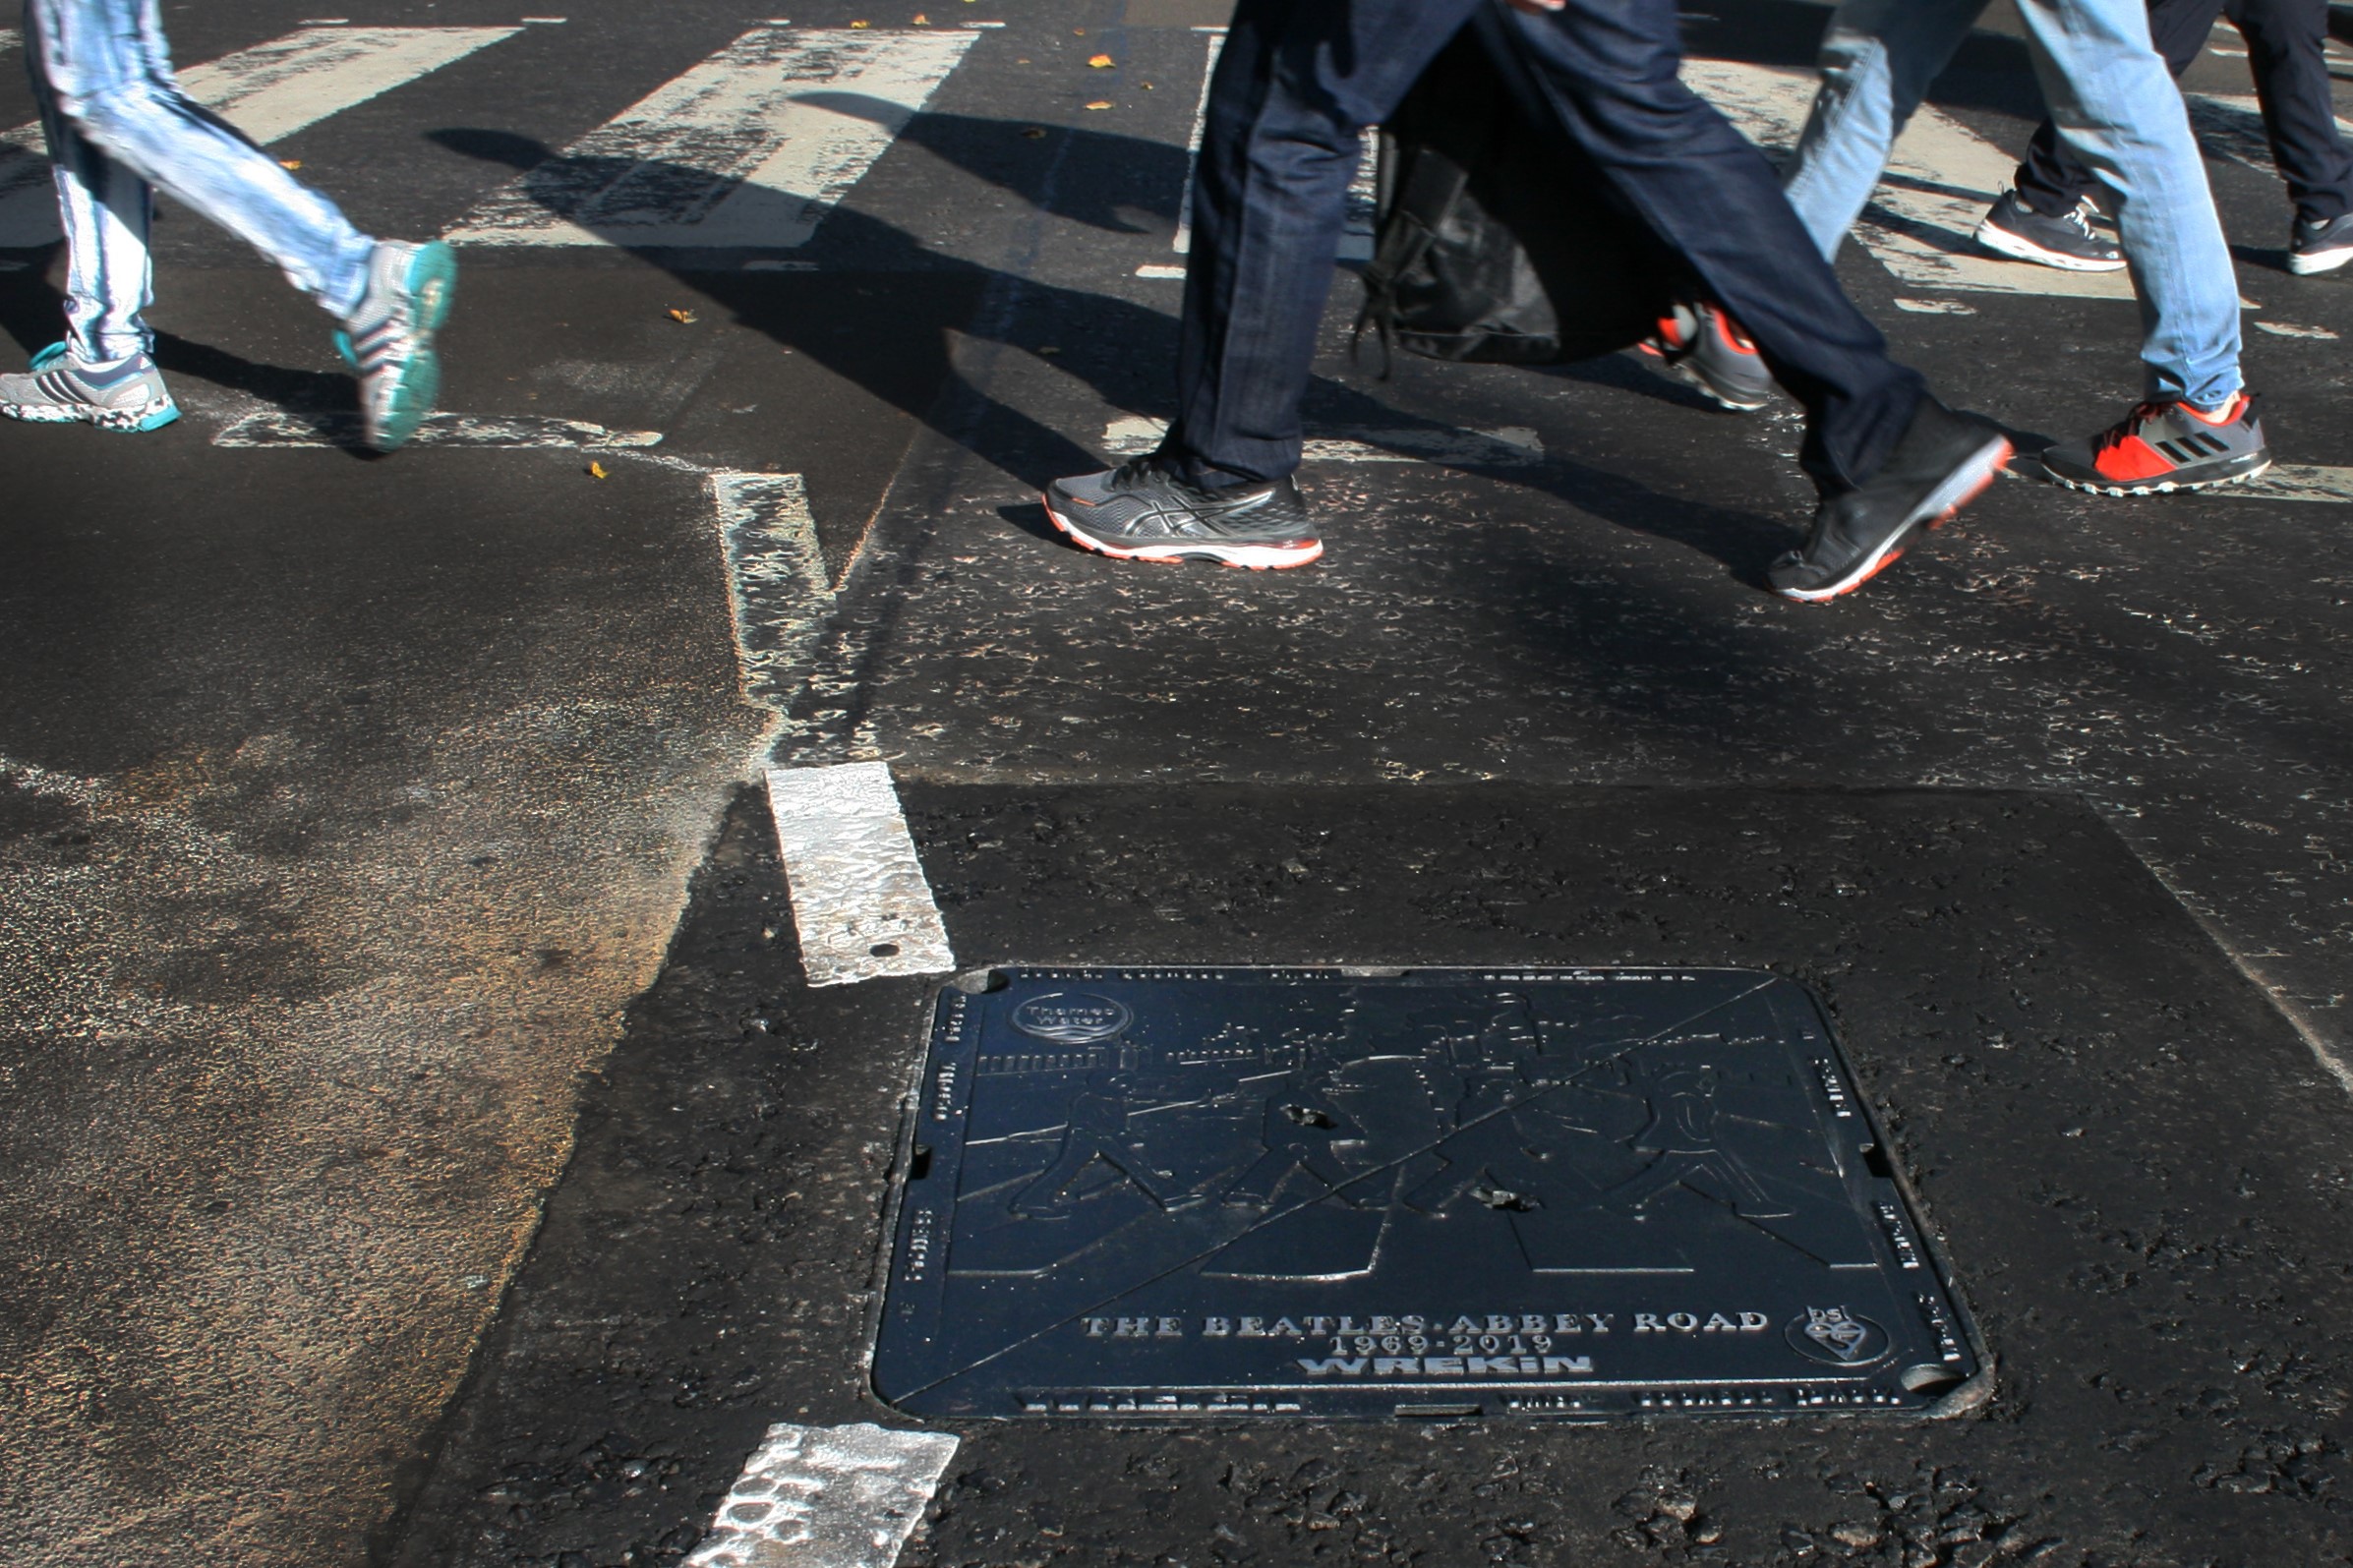 Pedestrians walking near Abbey Road manhole cover